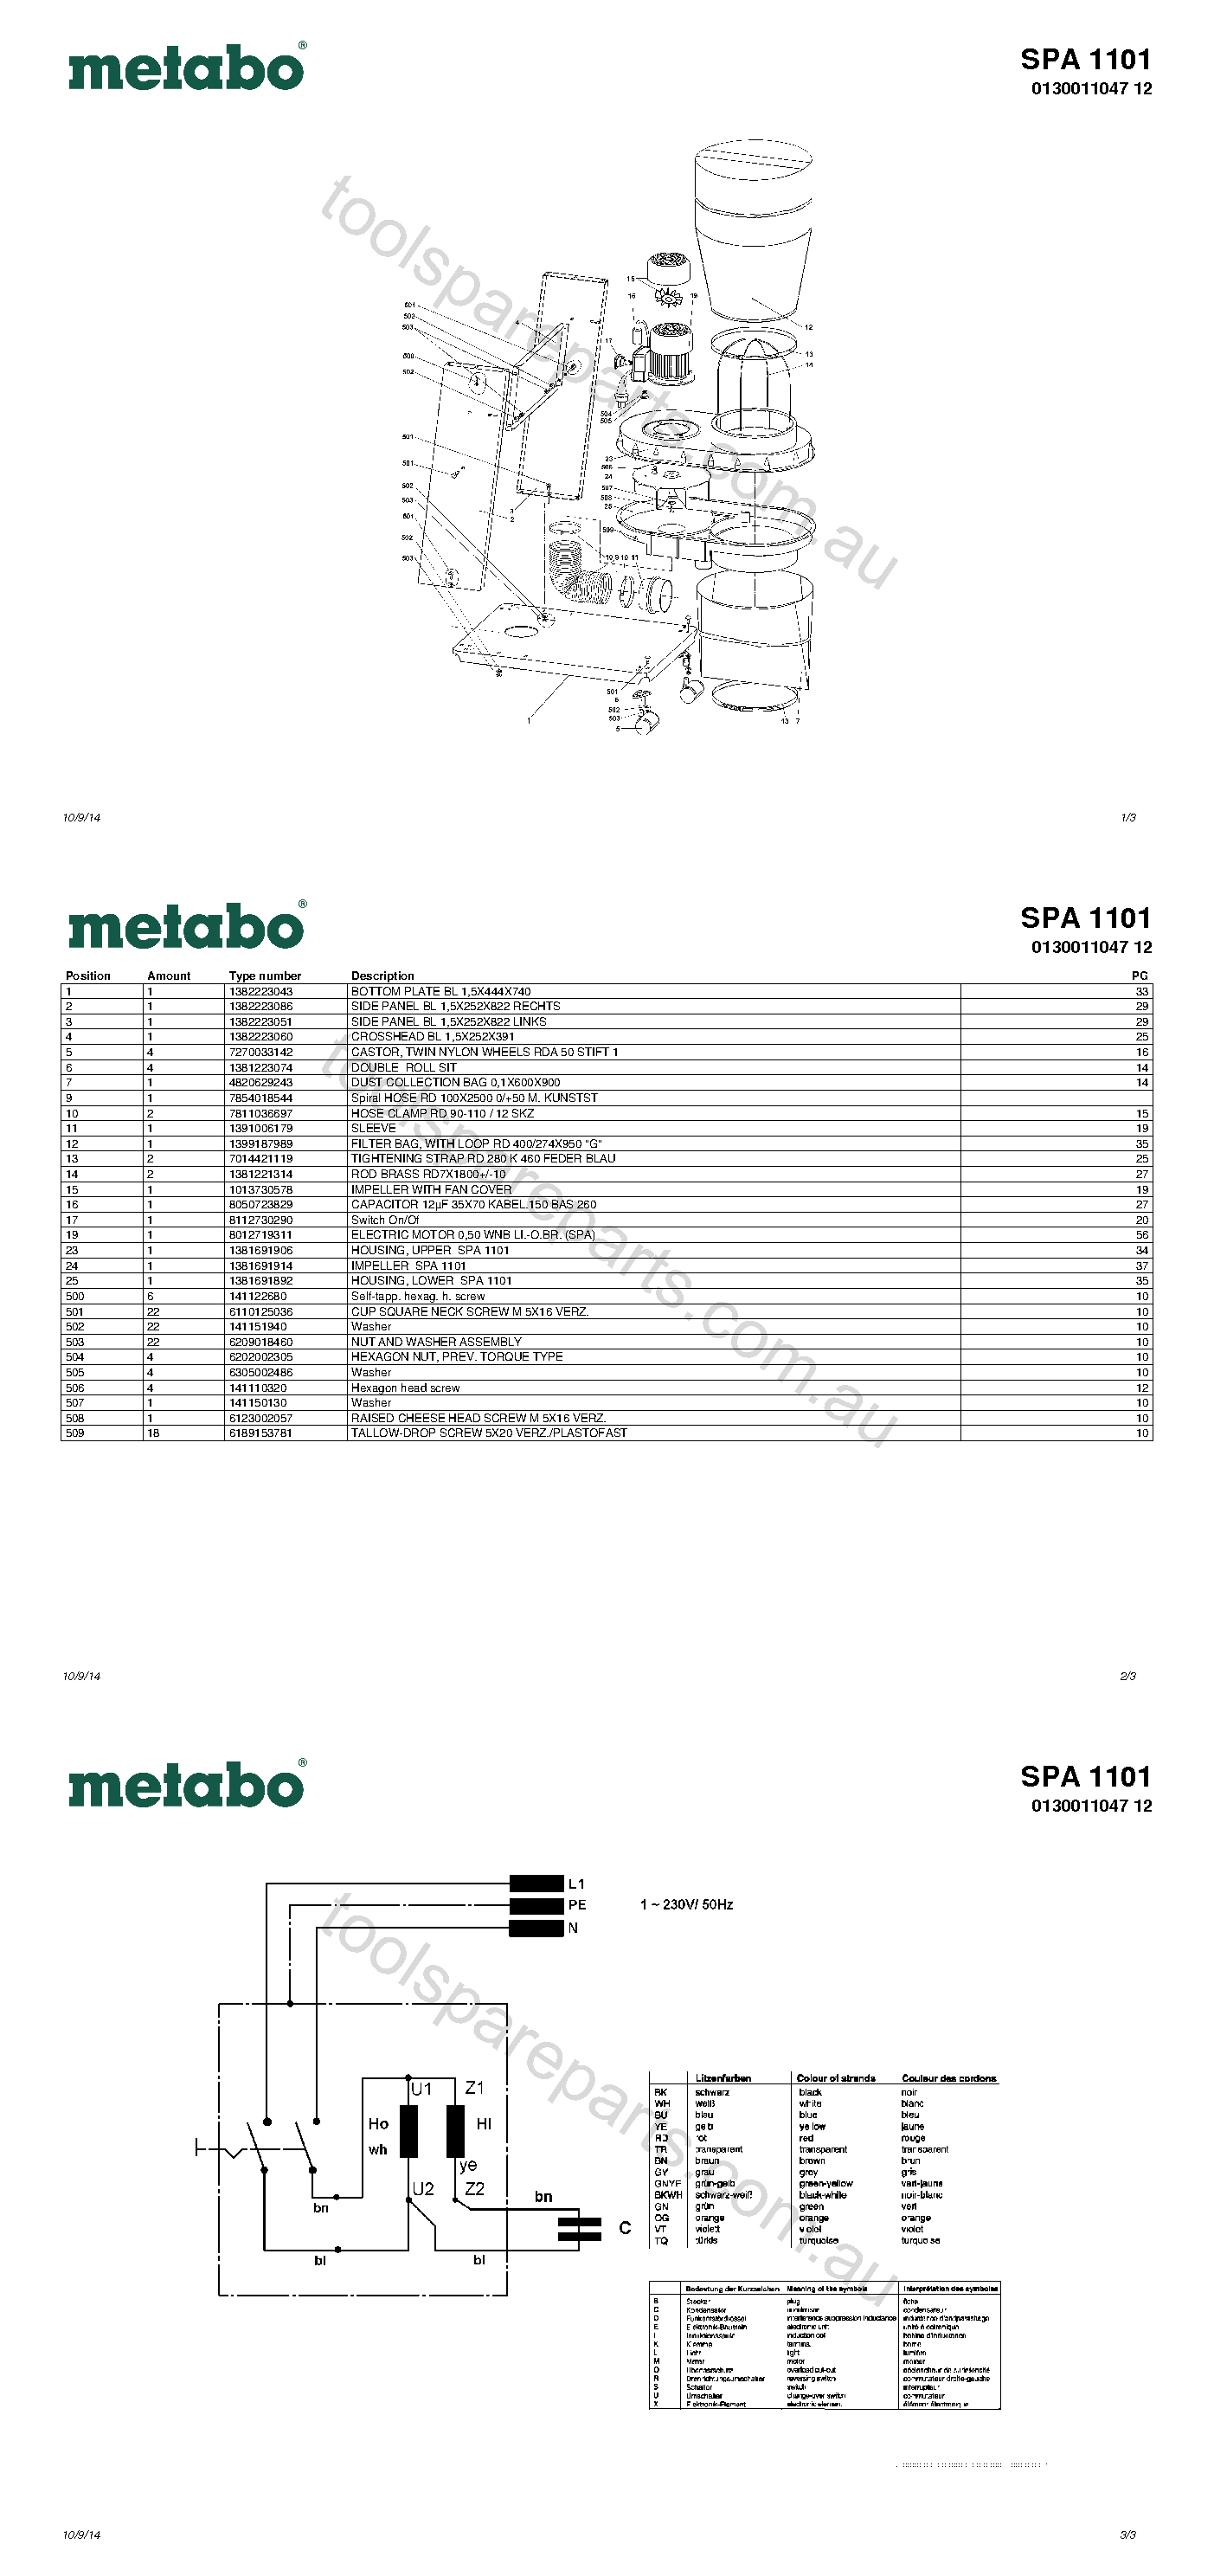 Metabo SPA 1101 0130011047 12  Diagram 1